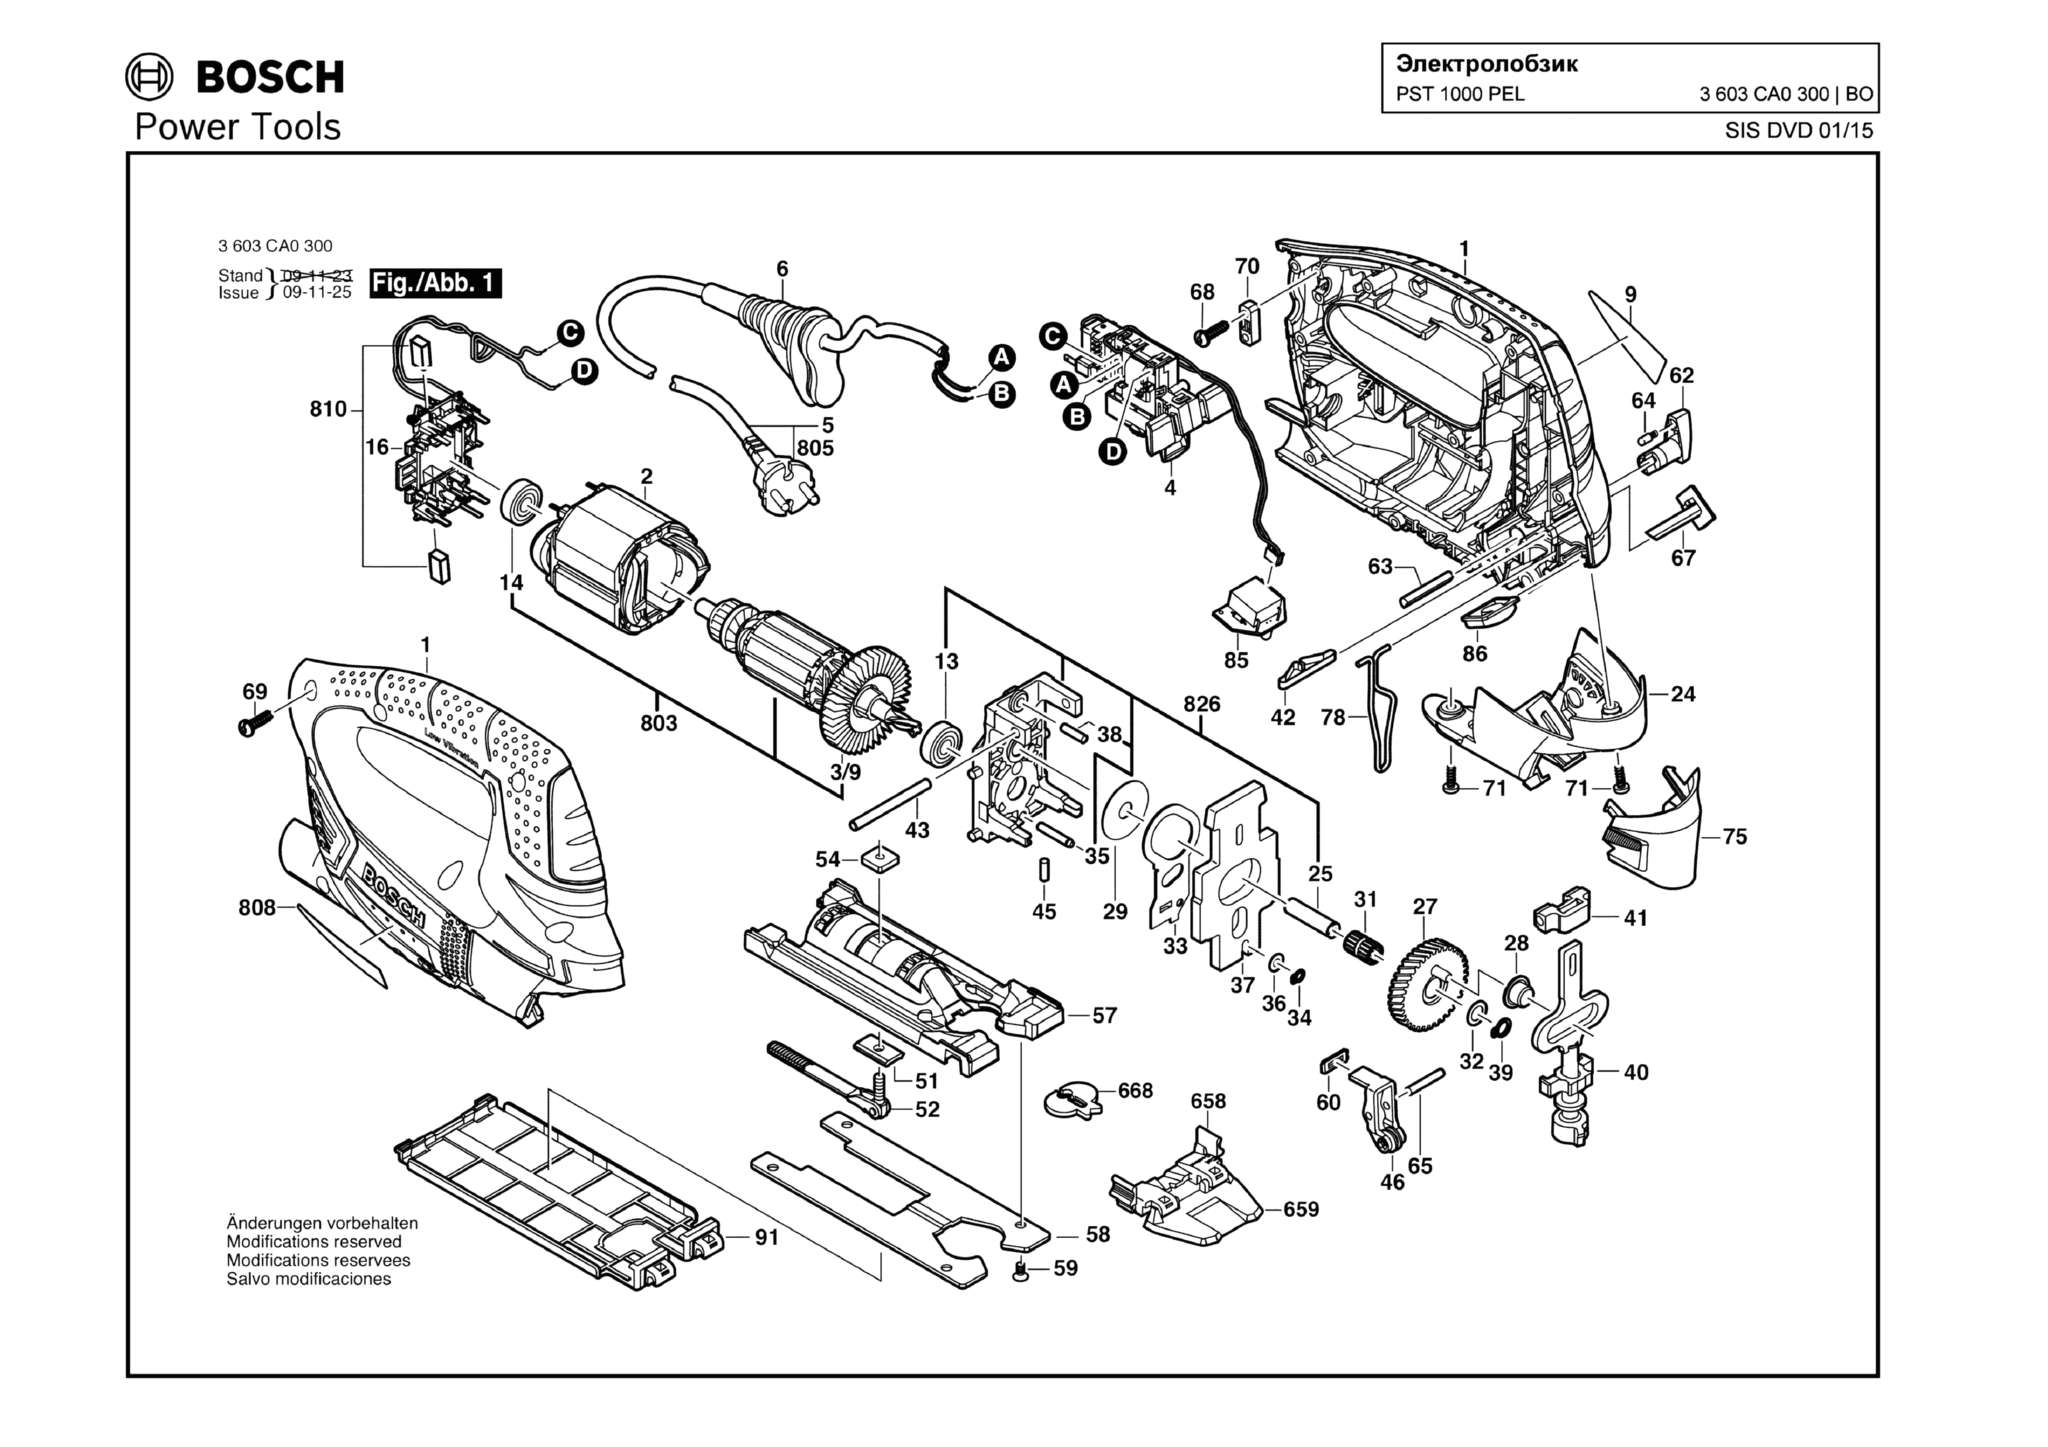 Запчасти, схема и деталировка Bosch PST 1000 PEL (ТИП 3603CA0300)